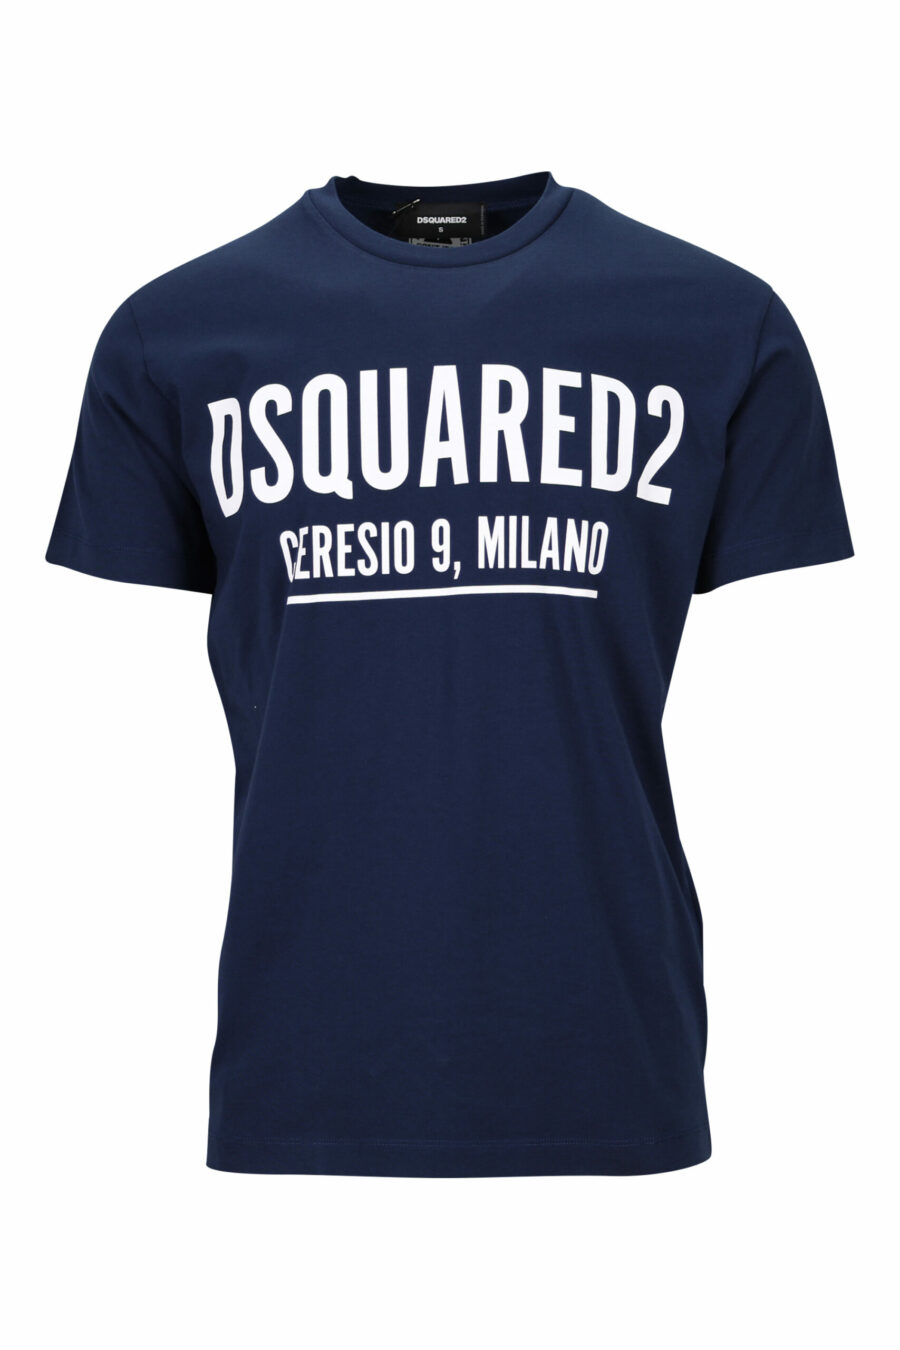 Dunkelblaues T-shirt mit Maxilogo "ceresio 9, milano" - 8054148504915 skaliert